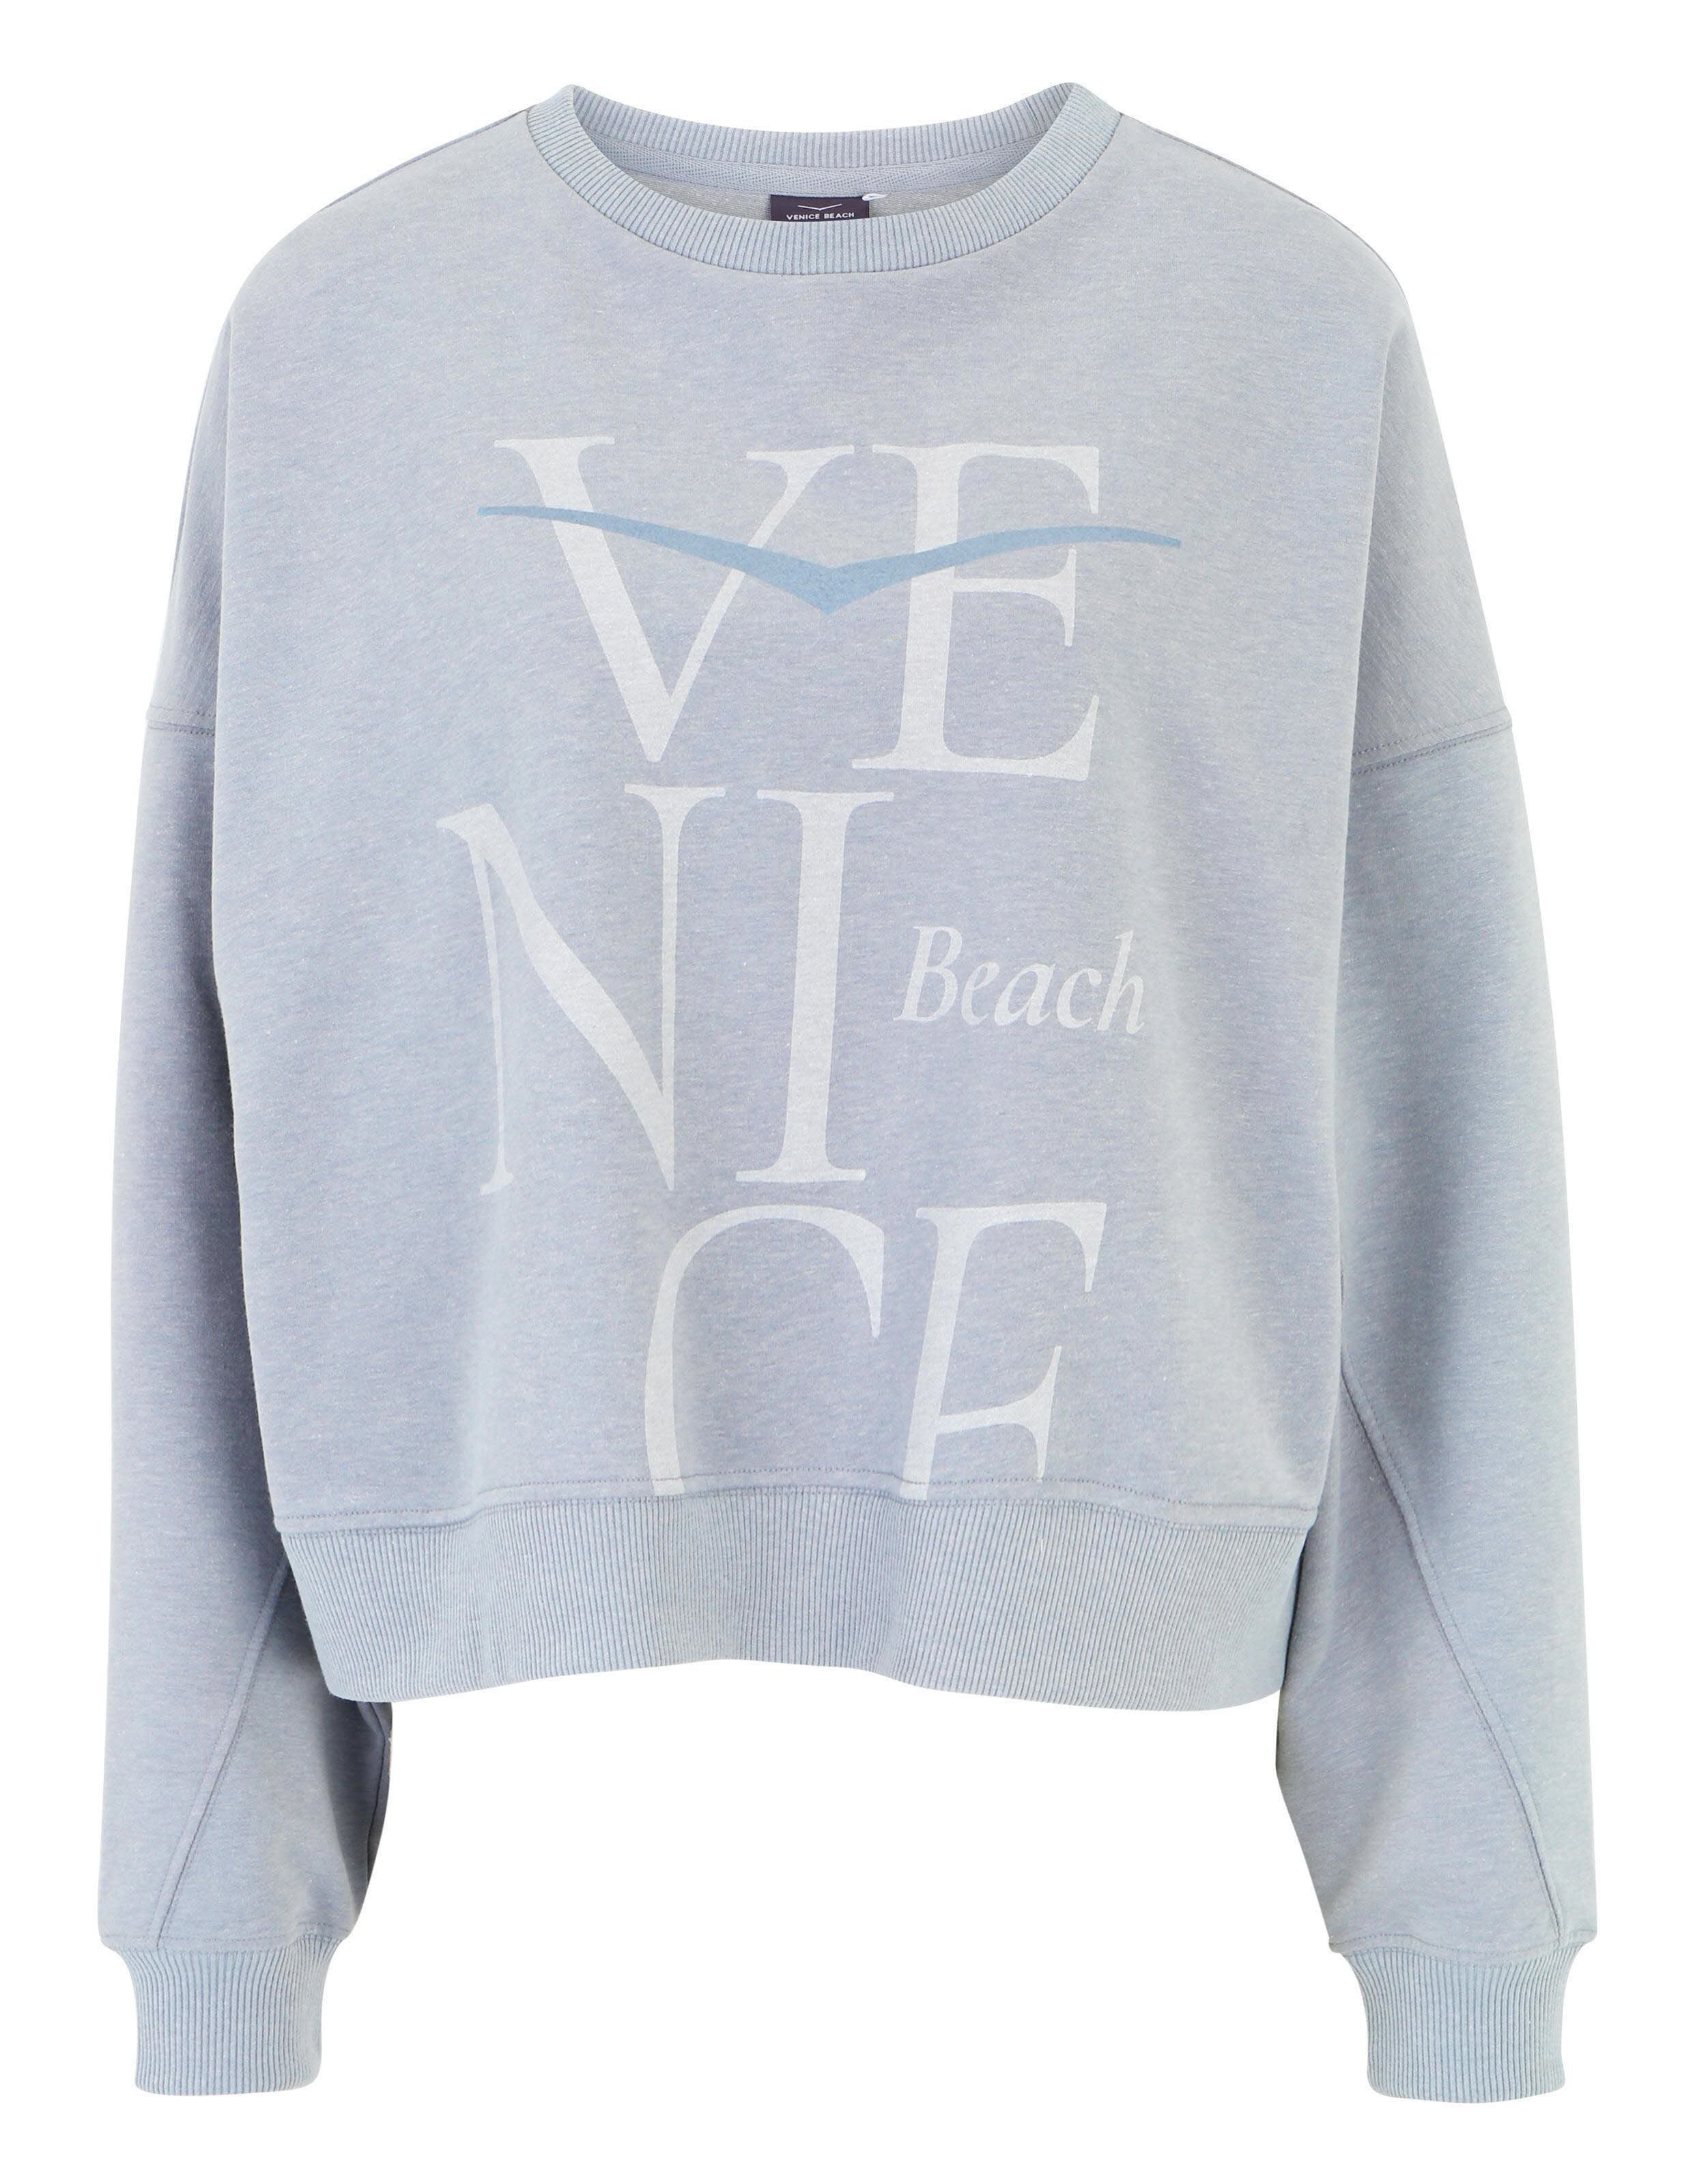 Venice Sweatshirt